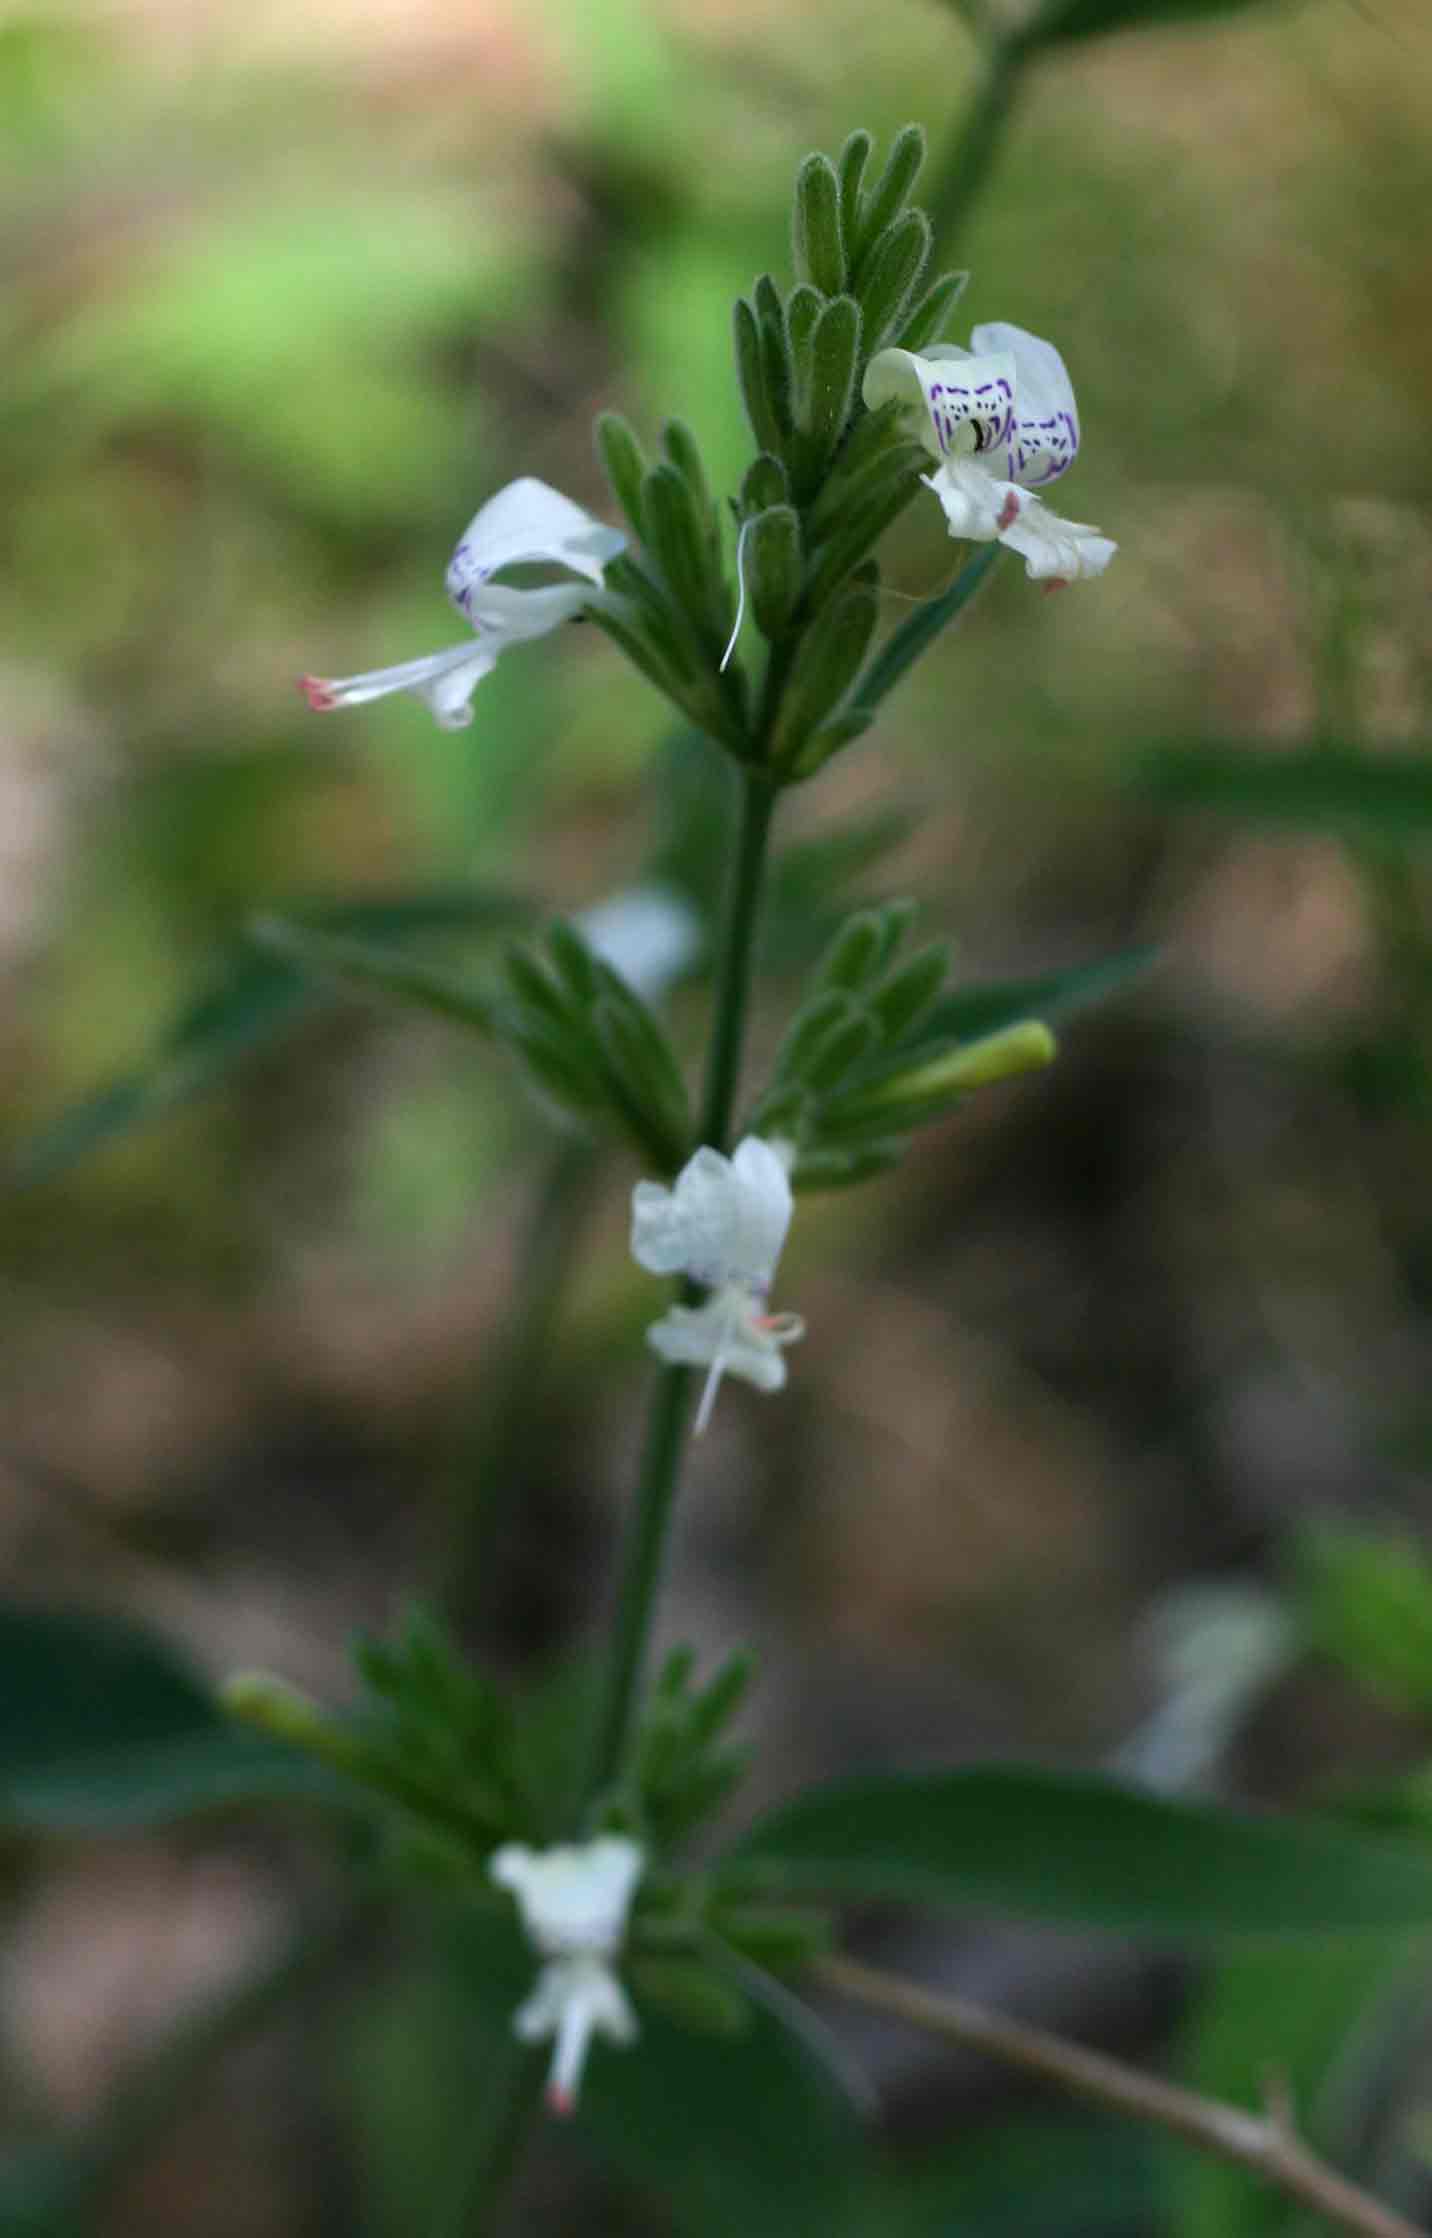 Hypoestes forskaolii subsp. forskaolii